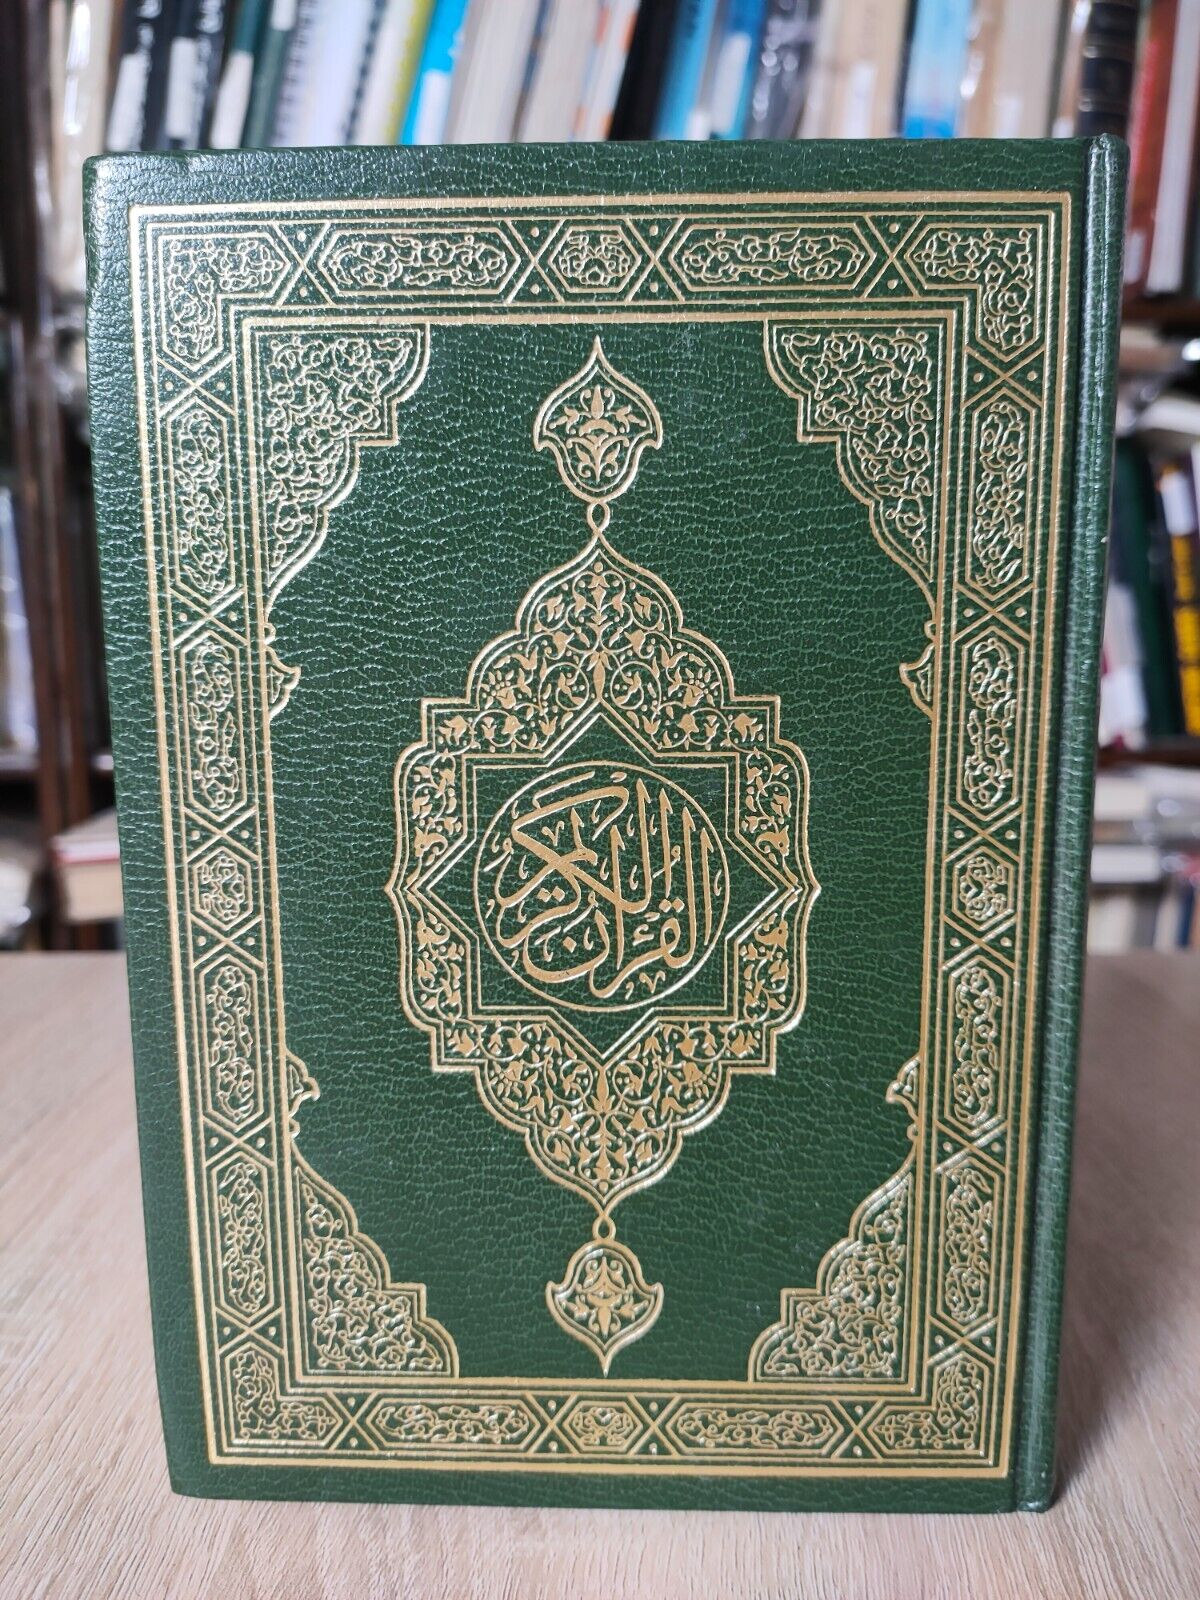 1987 Vintage Islamic Holy Quran Koran القرآن الكريم المصحف الشريف الملك فهد